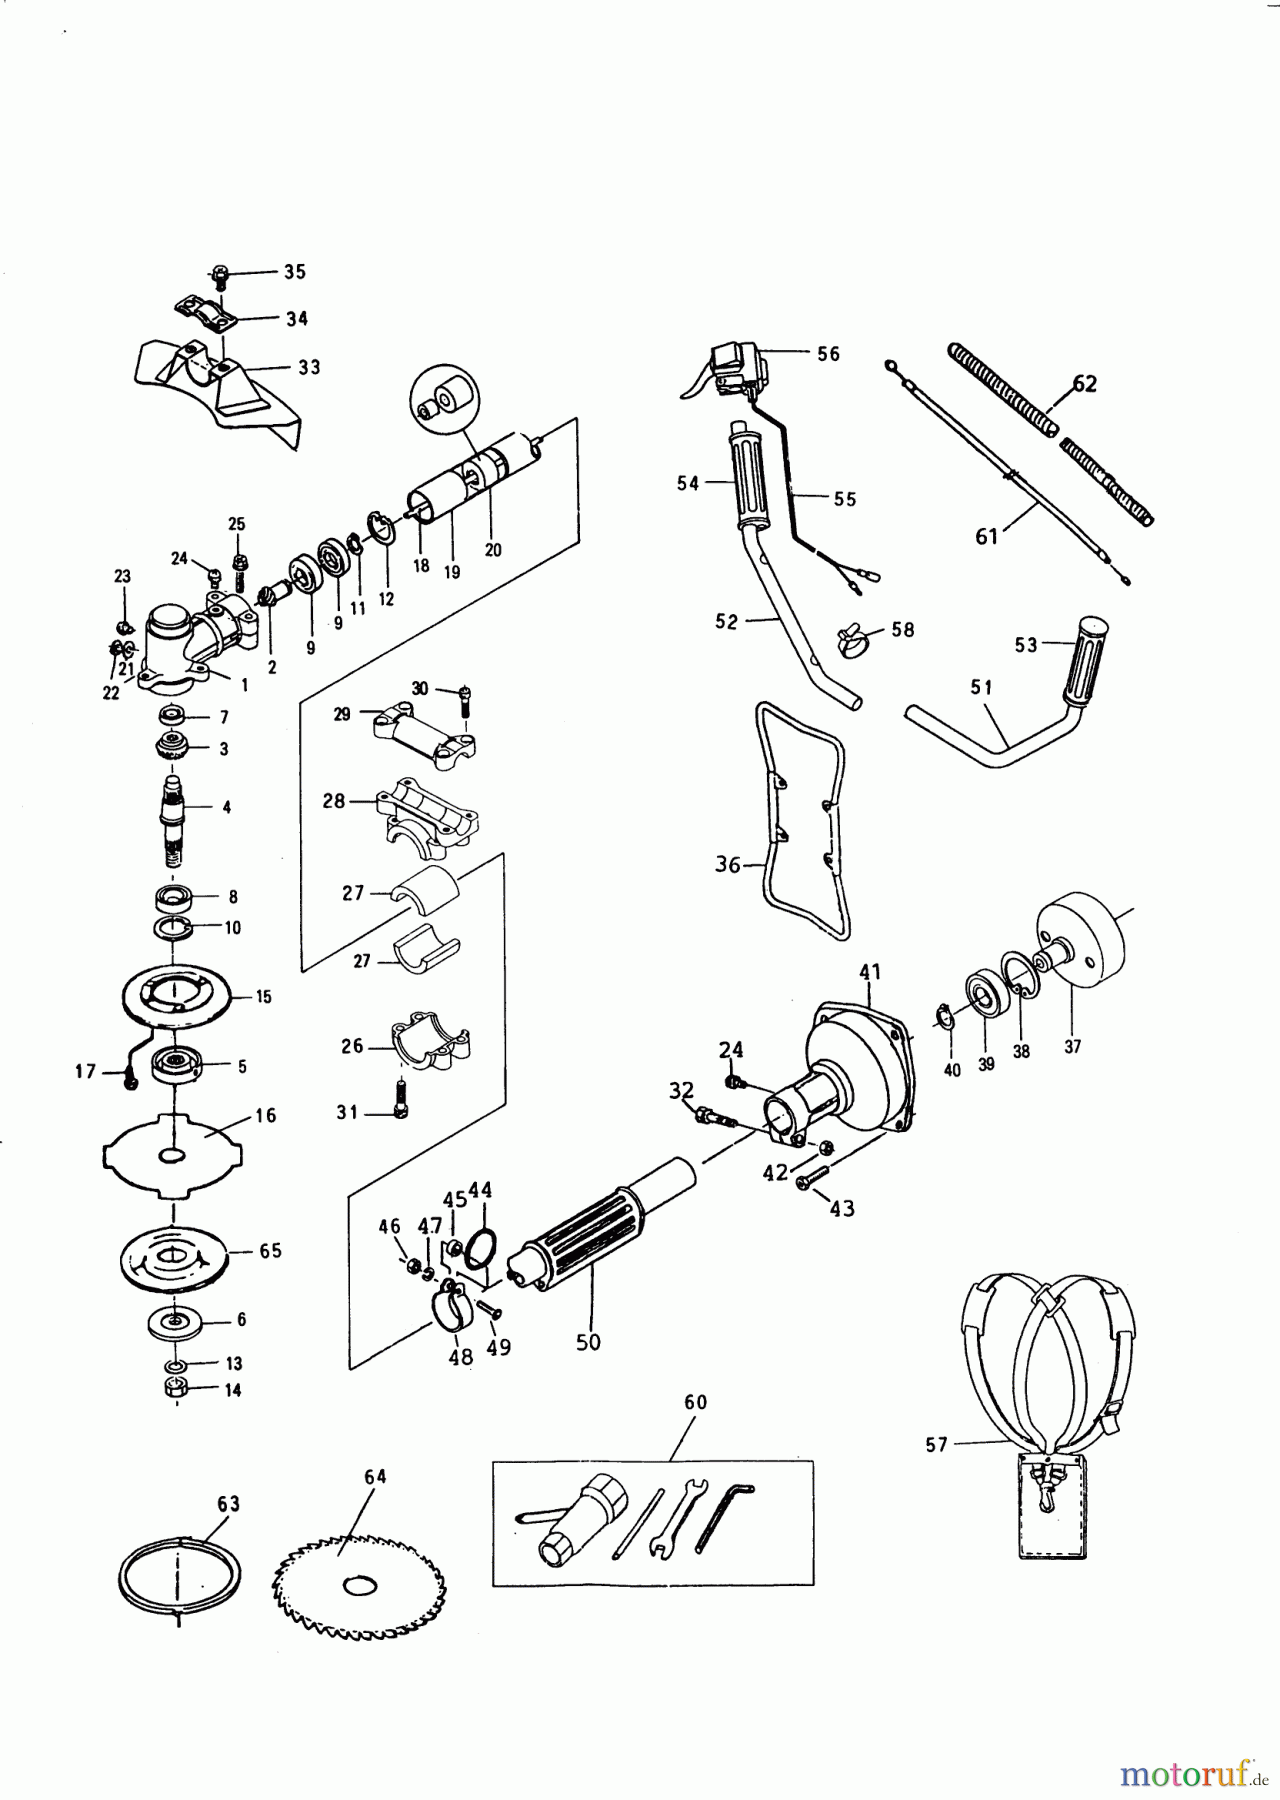  AL-KO Gartentechnik Motorsensen MS 330  00/0 Seite 1